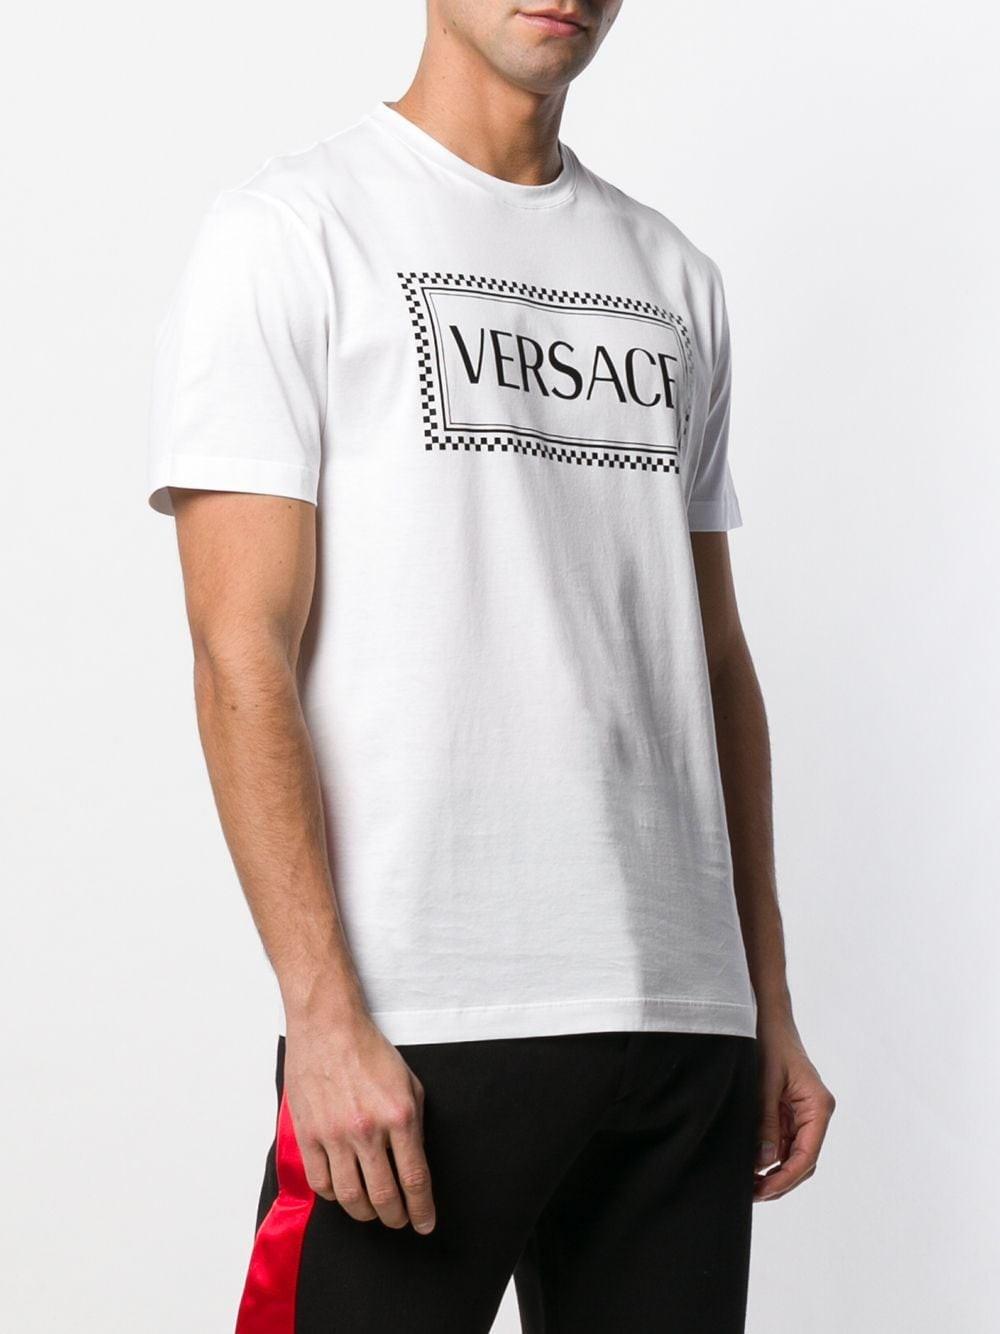 Versace Cotton Logo T-shirt in White for Men - Lyst